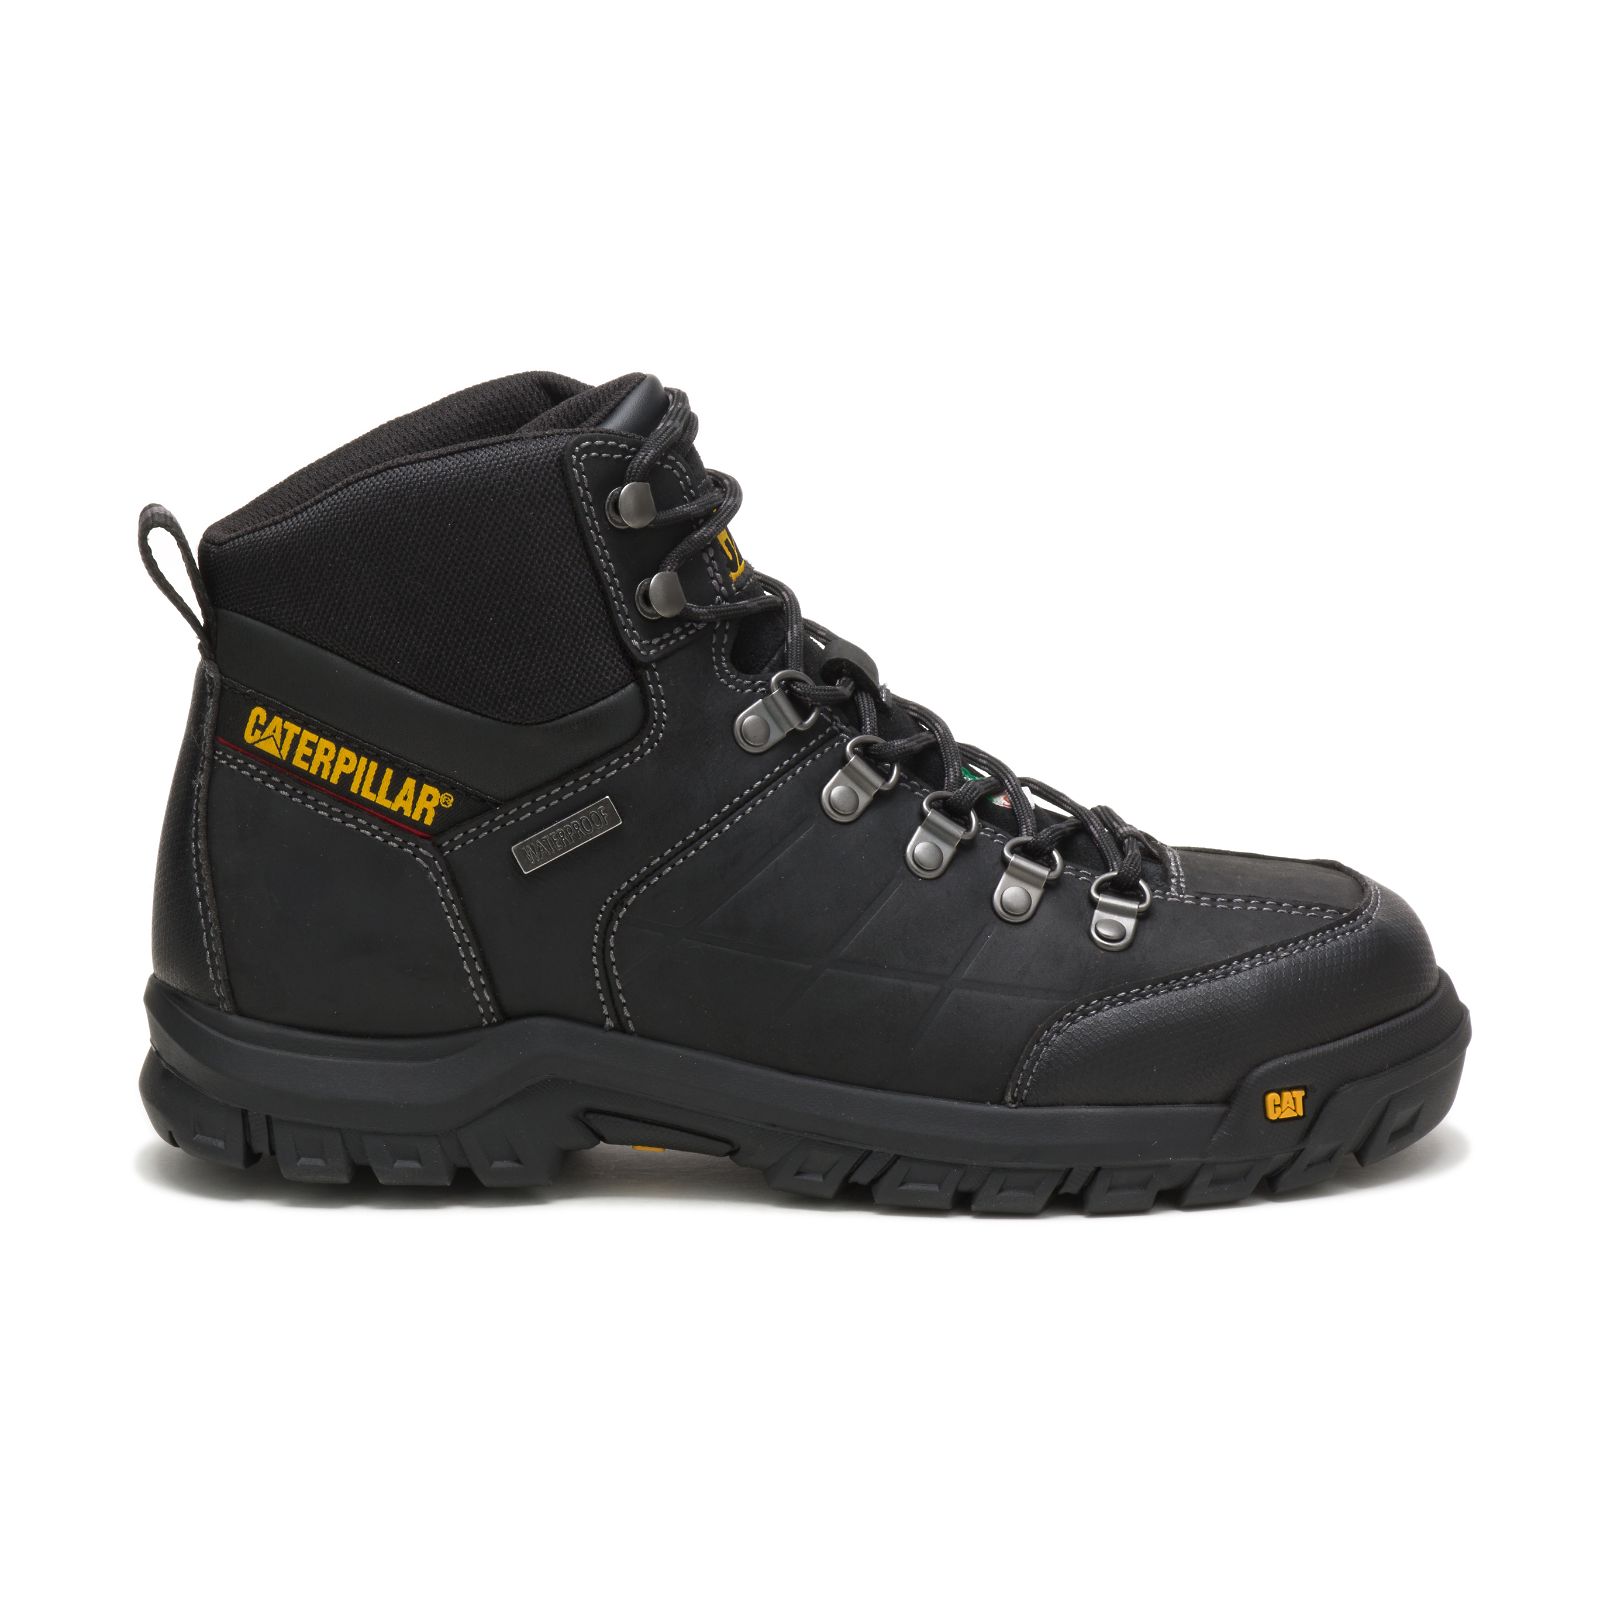 Caterpillar Work Boots Dubai - Caterpillar Threshold Waterproof Steel Toe Csa Mens - Black QKOHAG682